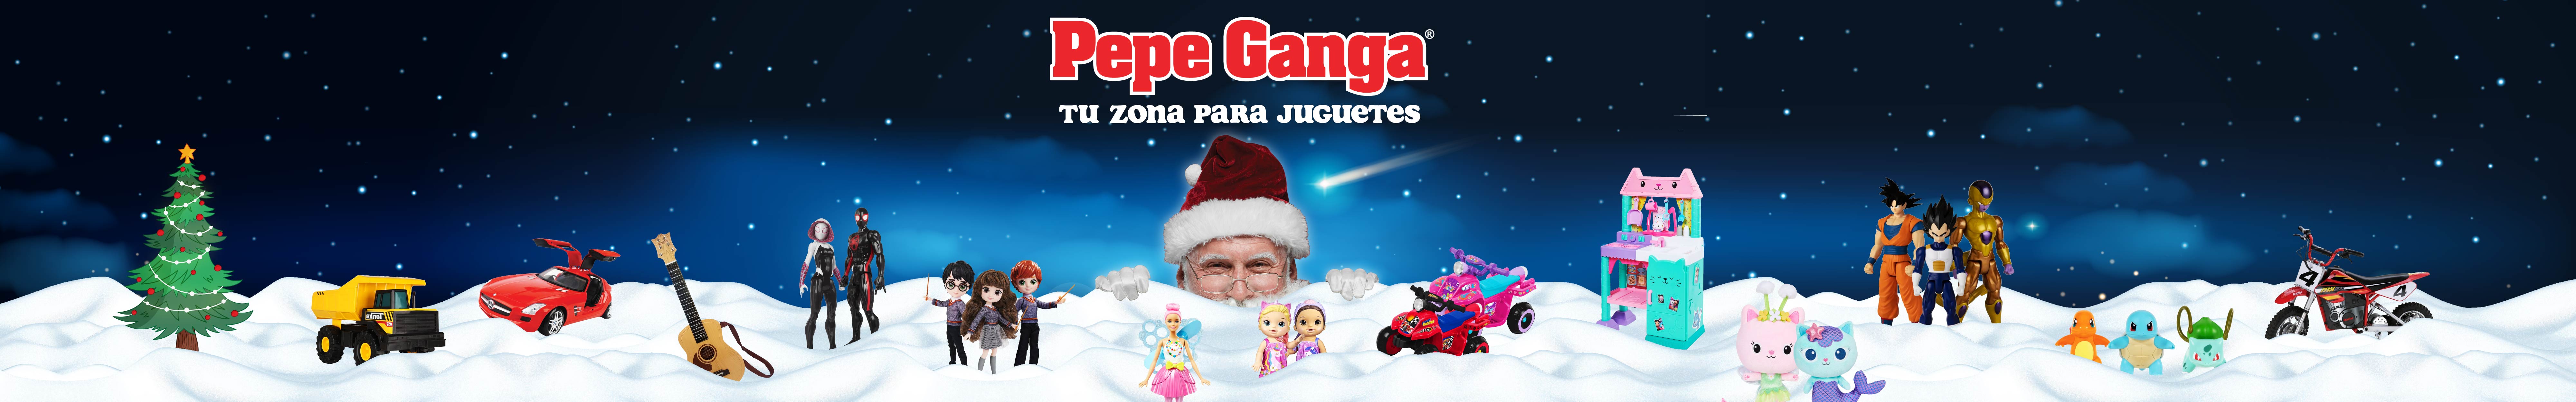 Pepe Ganga PR